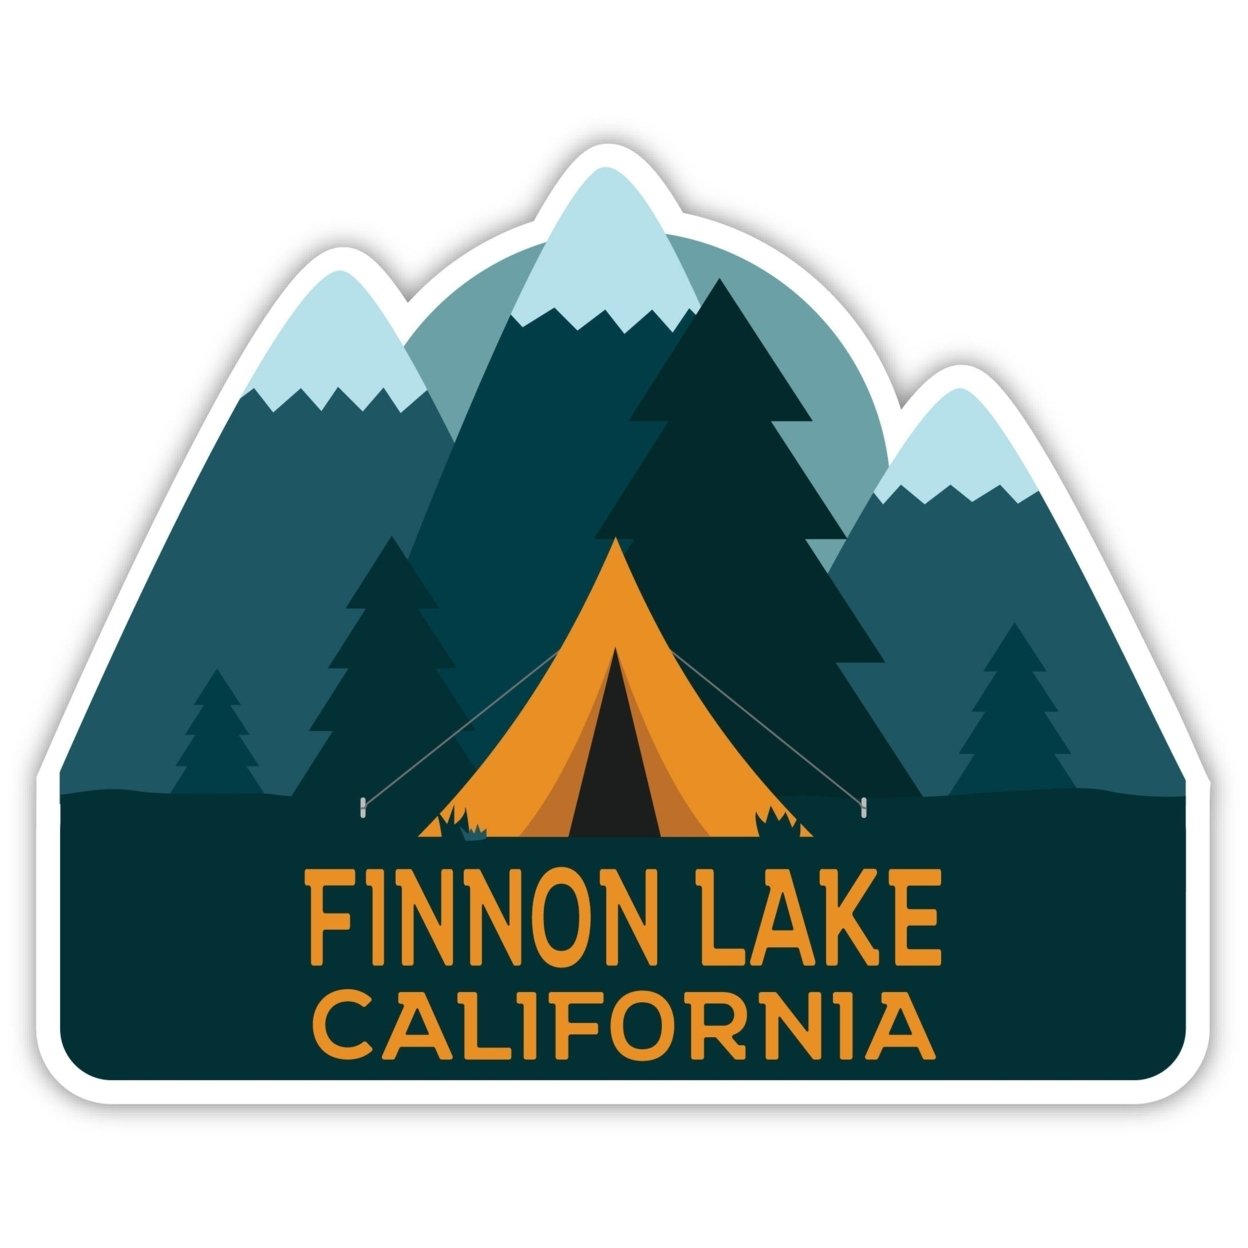 Finnon Lake California Souvenir Decorative Stickers (Choose Theme And Size) - 4-Pack, 6-Inch, Tent